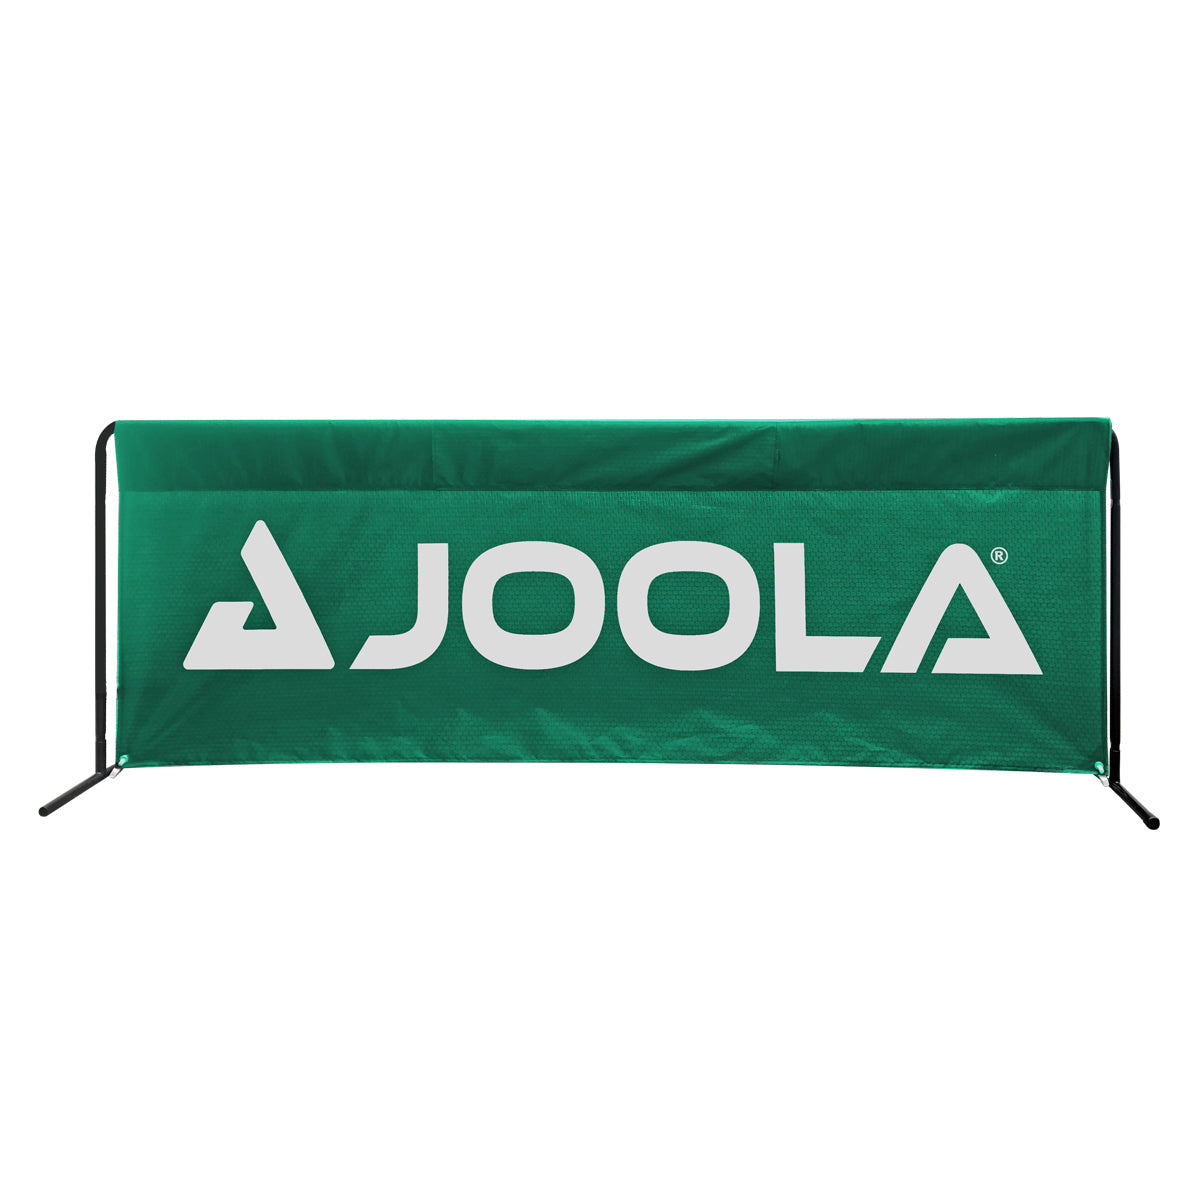 Joola Table Surrounds Green 2pcs